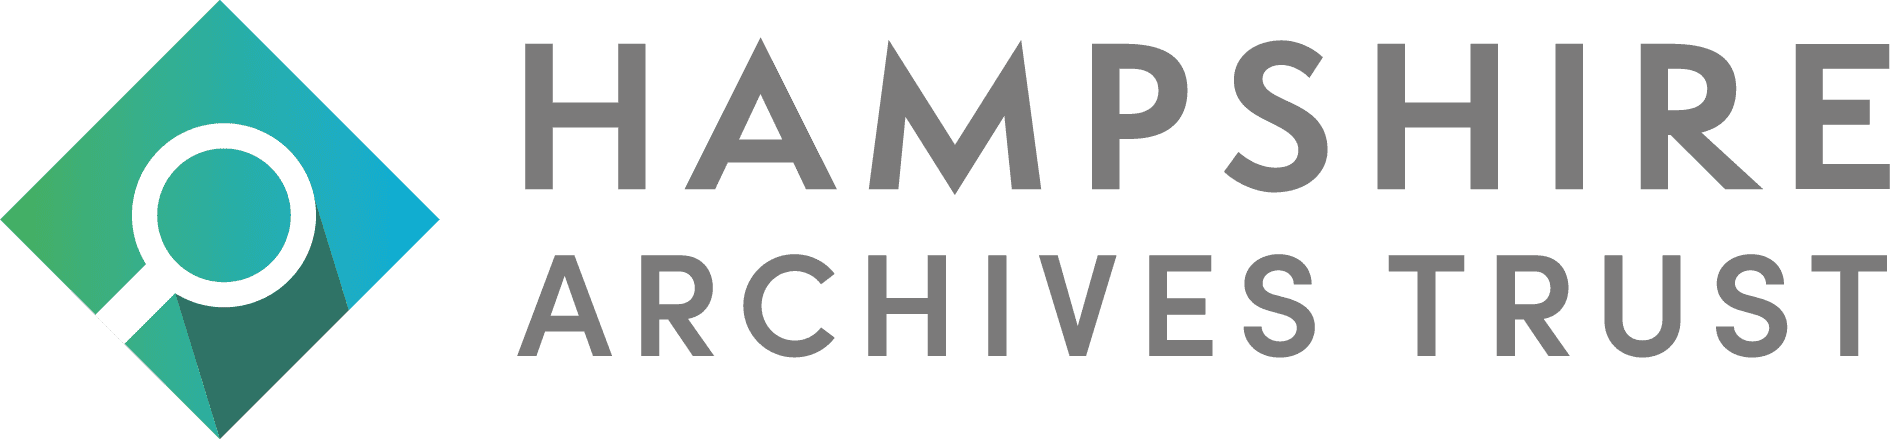 Hampshire Archives Trust logo